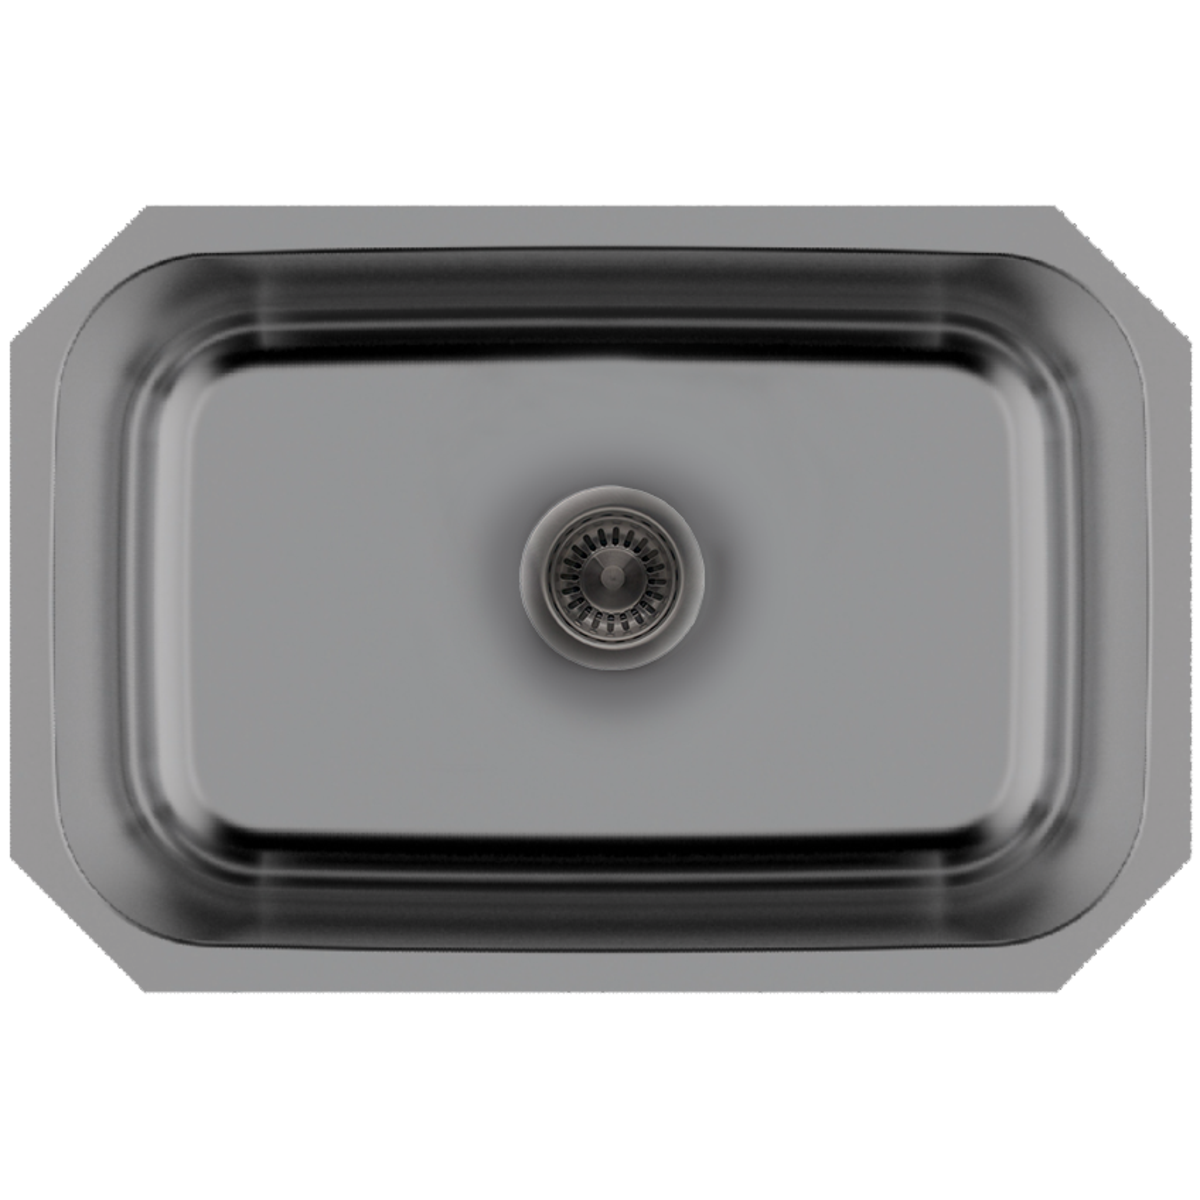 Pelican Int'l Signature Series PL-VS2718 16 Gauge Stainless Steel Single Bowl Undermount Kitchen Sink 27" x 17 3/4"